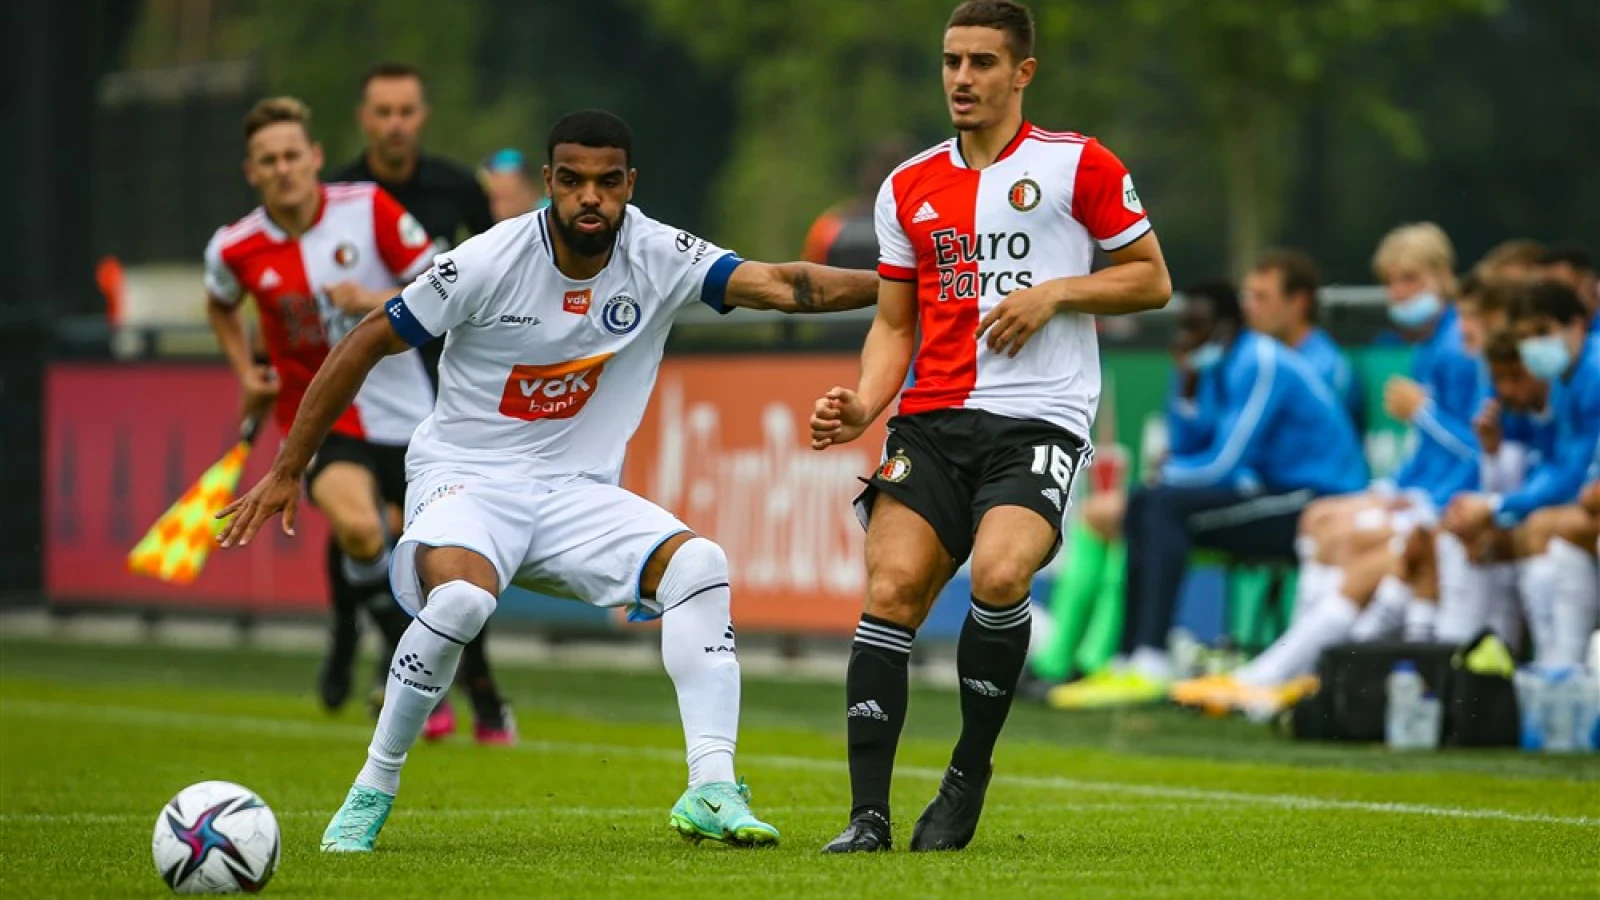 LIVE | Feyenoord - KAA Gent 1-1 | Einde wedstrijd